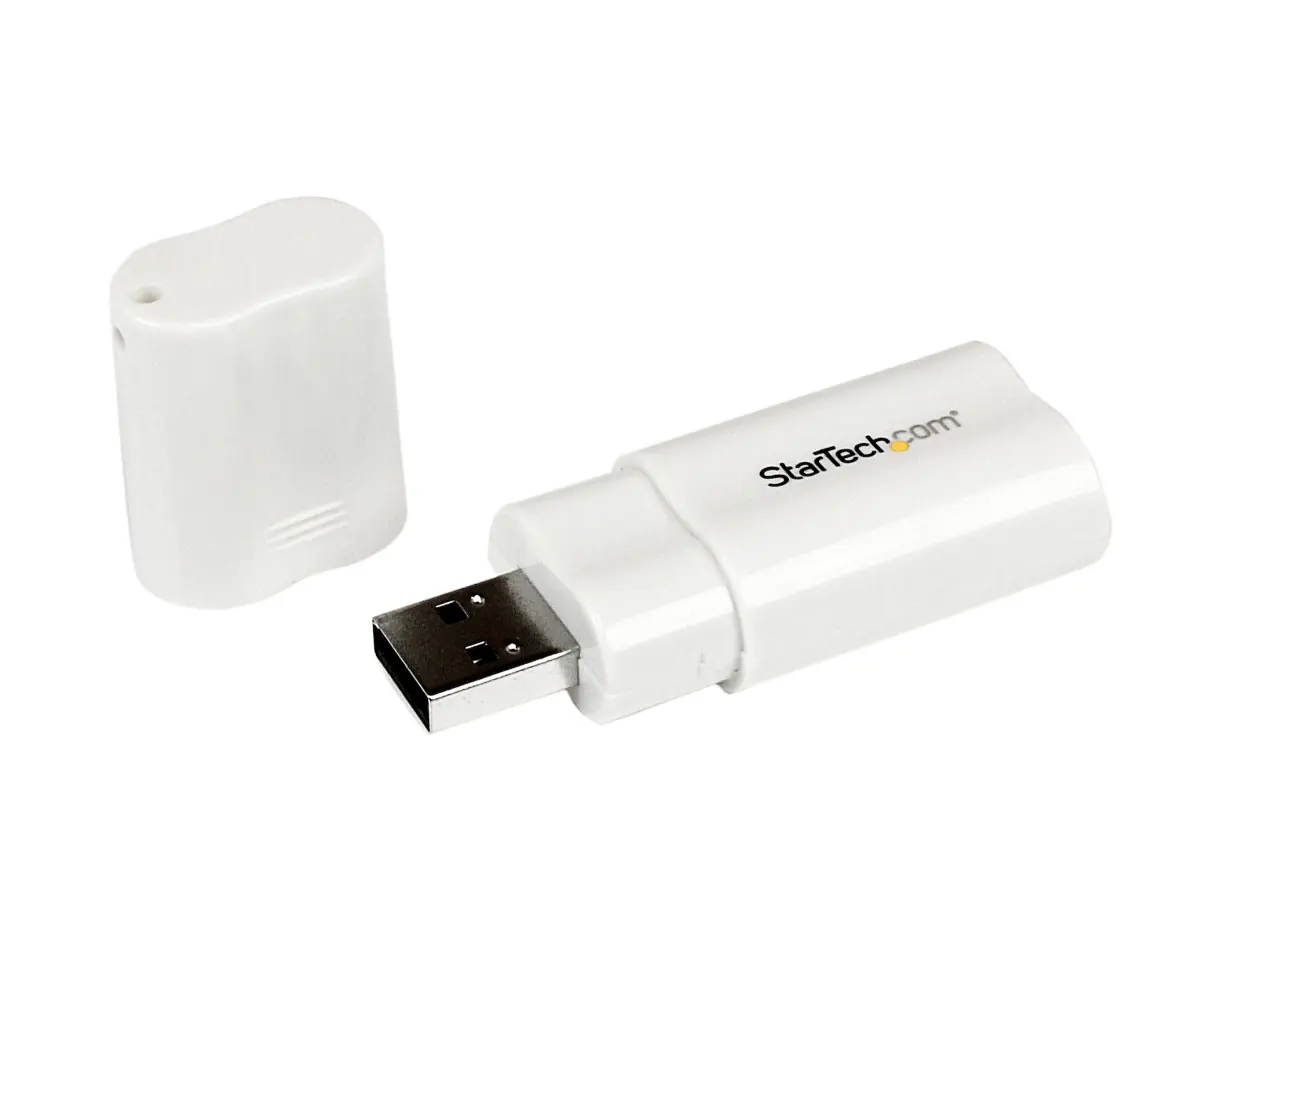 Dongle Audio USB bianco Startech più venduto per scopi di trasmissione Audio dal produttore statunitense ai migliori prezzi